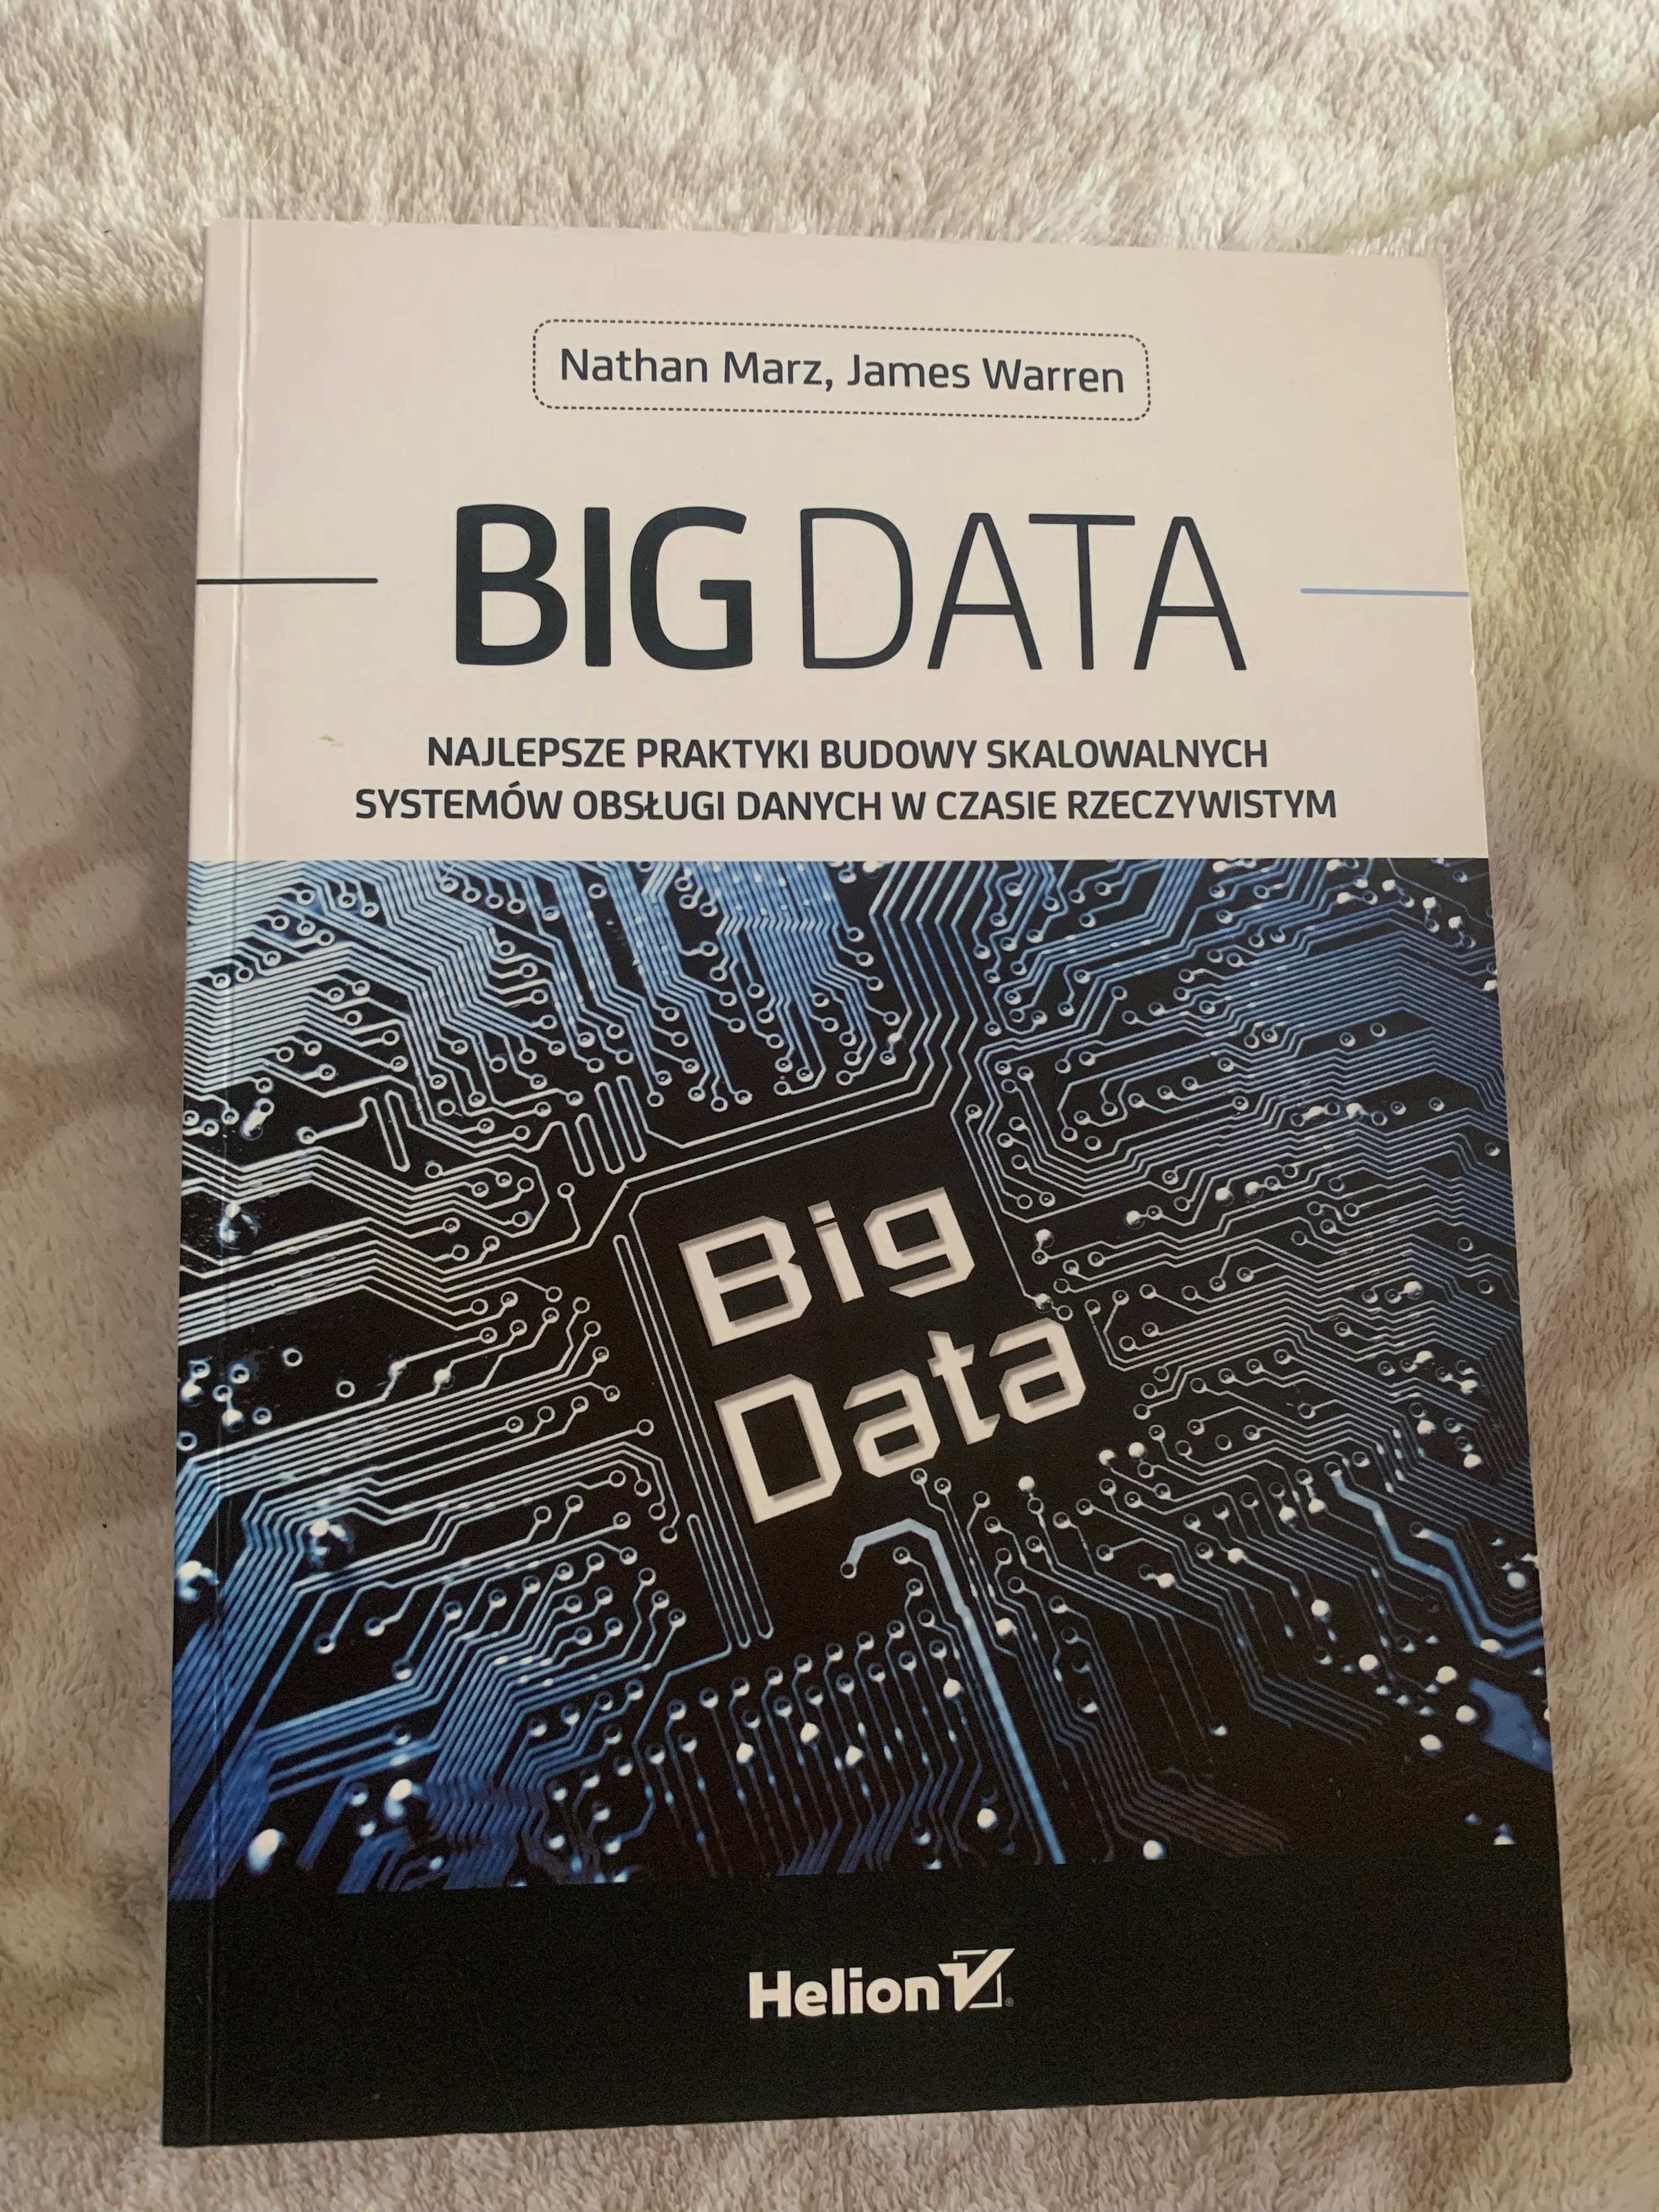 Big Data.
Nathan Marz, James Warren